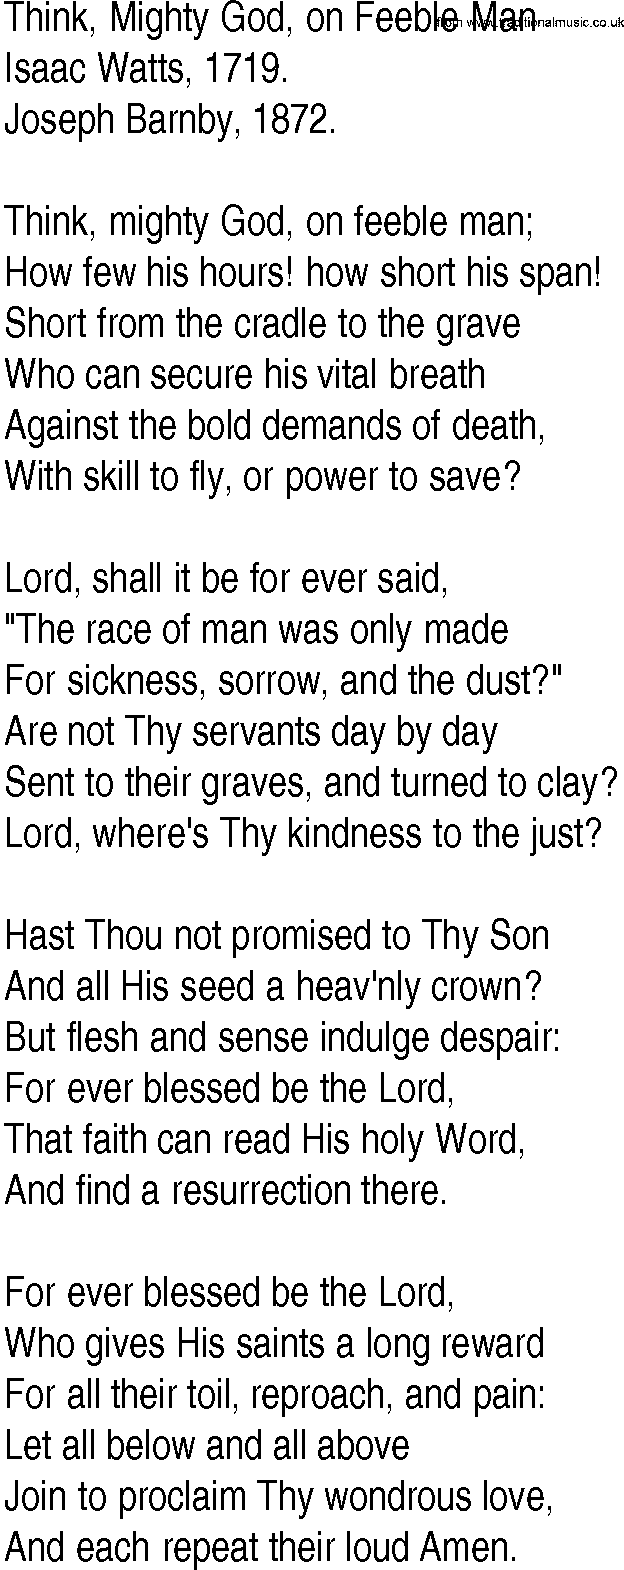 Hymn and Gospel Song: Think, Mighty God, on Feeble Man by Isaac Watts lyrics